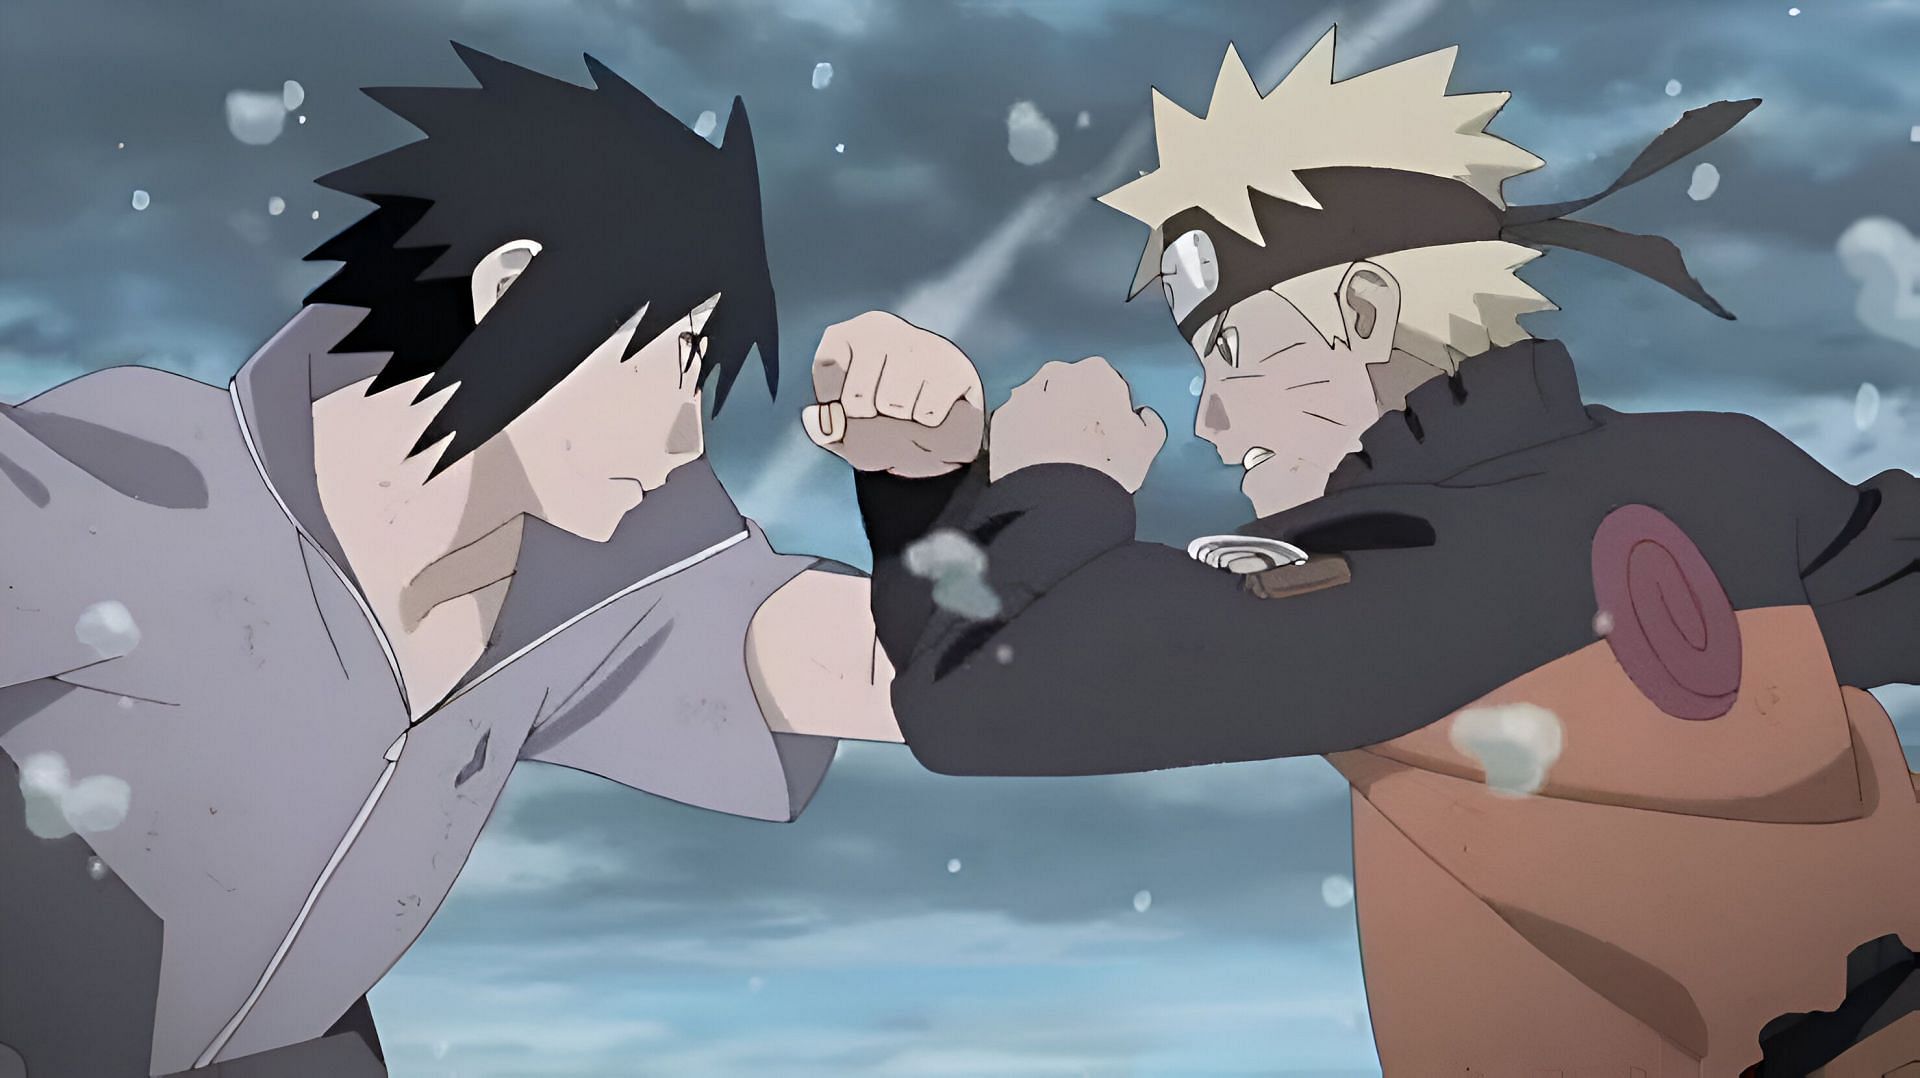 Sasuke (left) and Naruto (right) fighting their last battle (Image via Studio Pierrot)